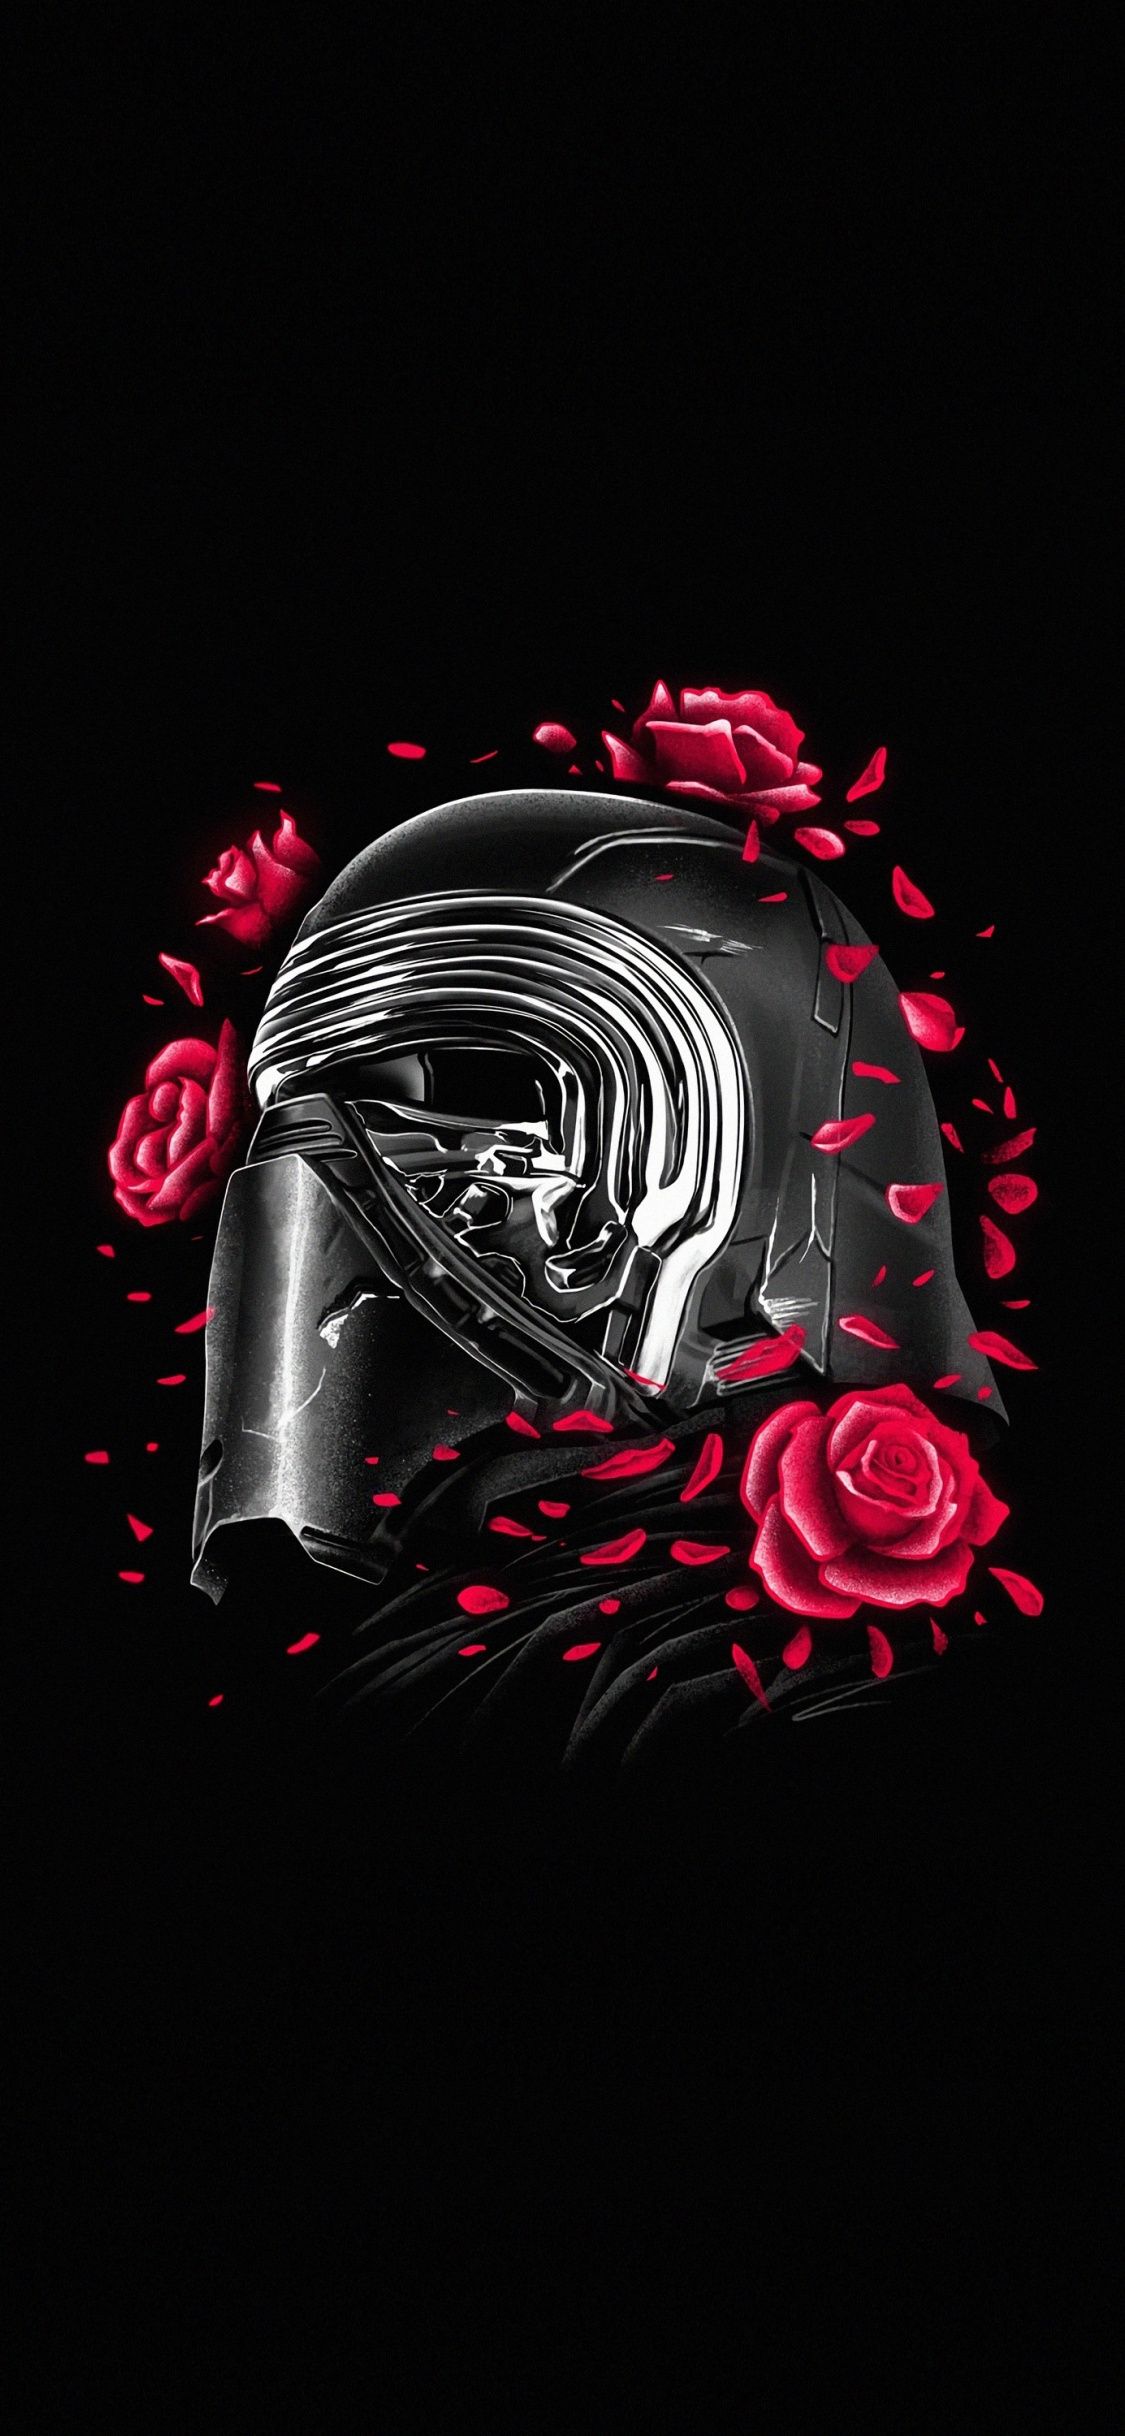 Kylo Ren, Helmet And Roses, Star Wars, Minimal, Wallpaper